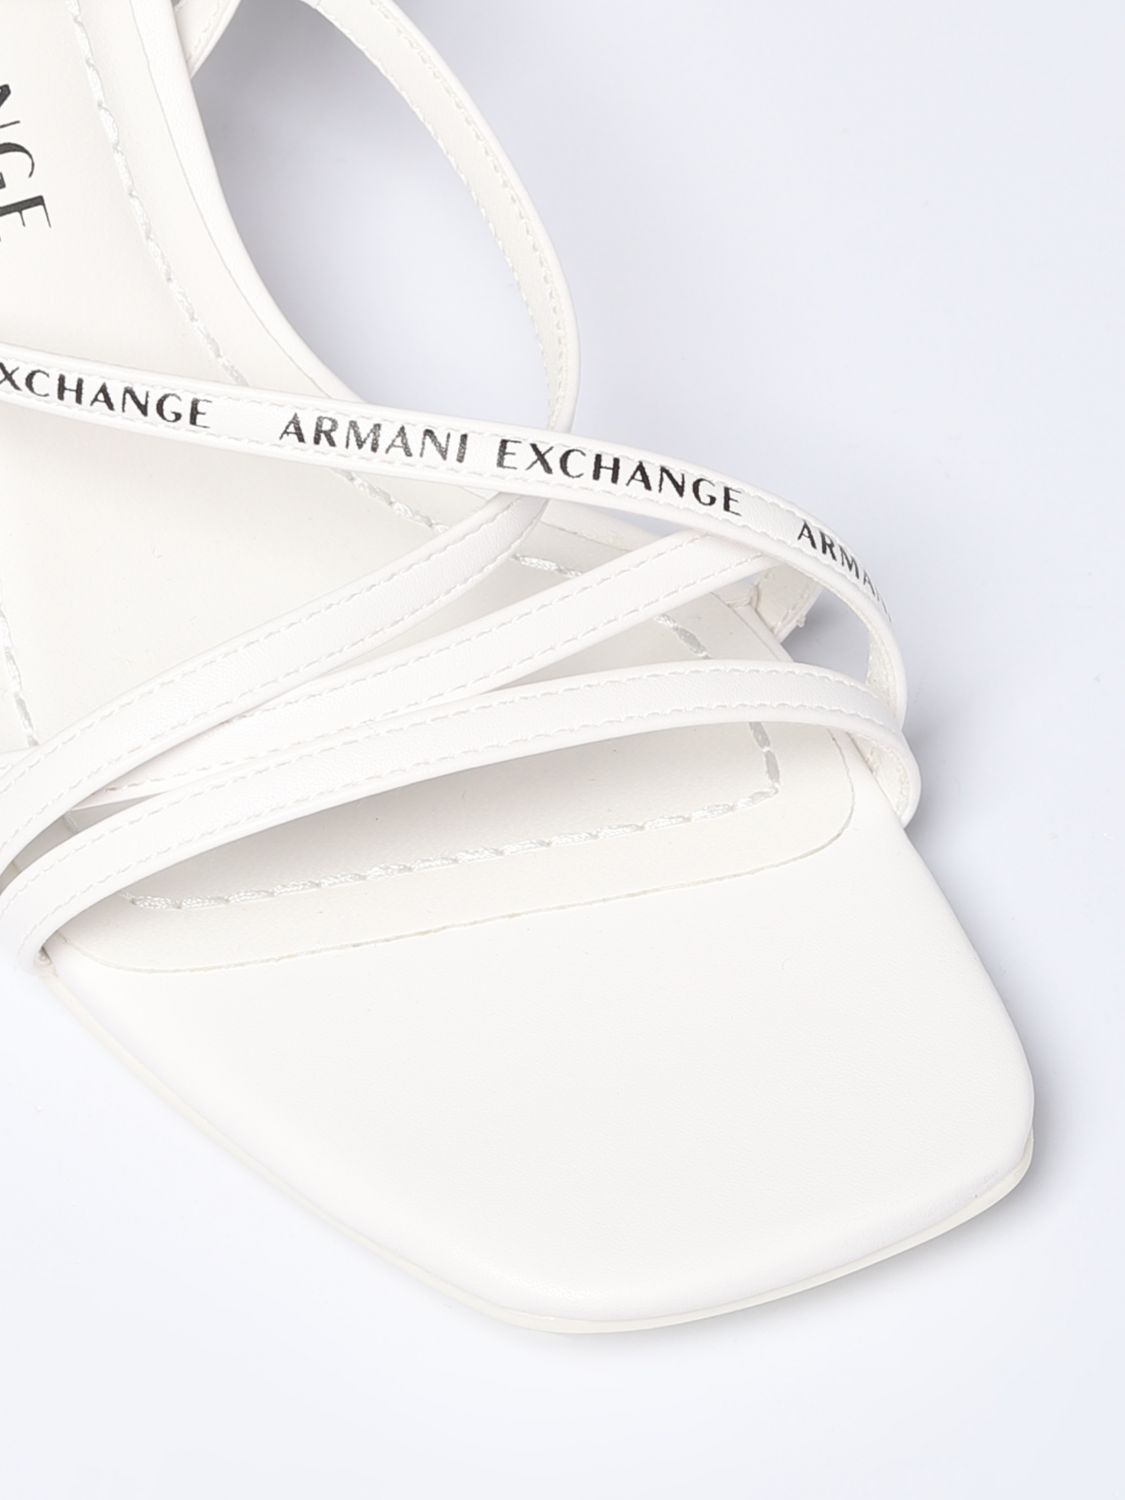 Krachtcel constante schotel ARMANI EXCHANGE: heeled sandals for woman - White | Armani Exchange heeled  sandals XDP033XV688 online on GIGLIO.COM